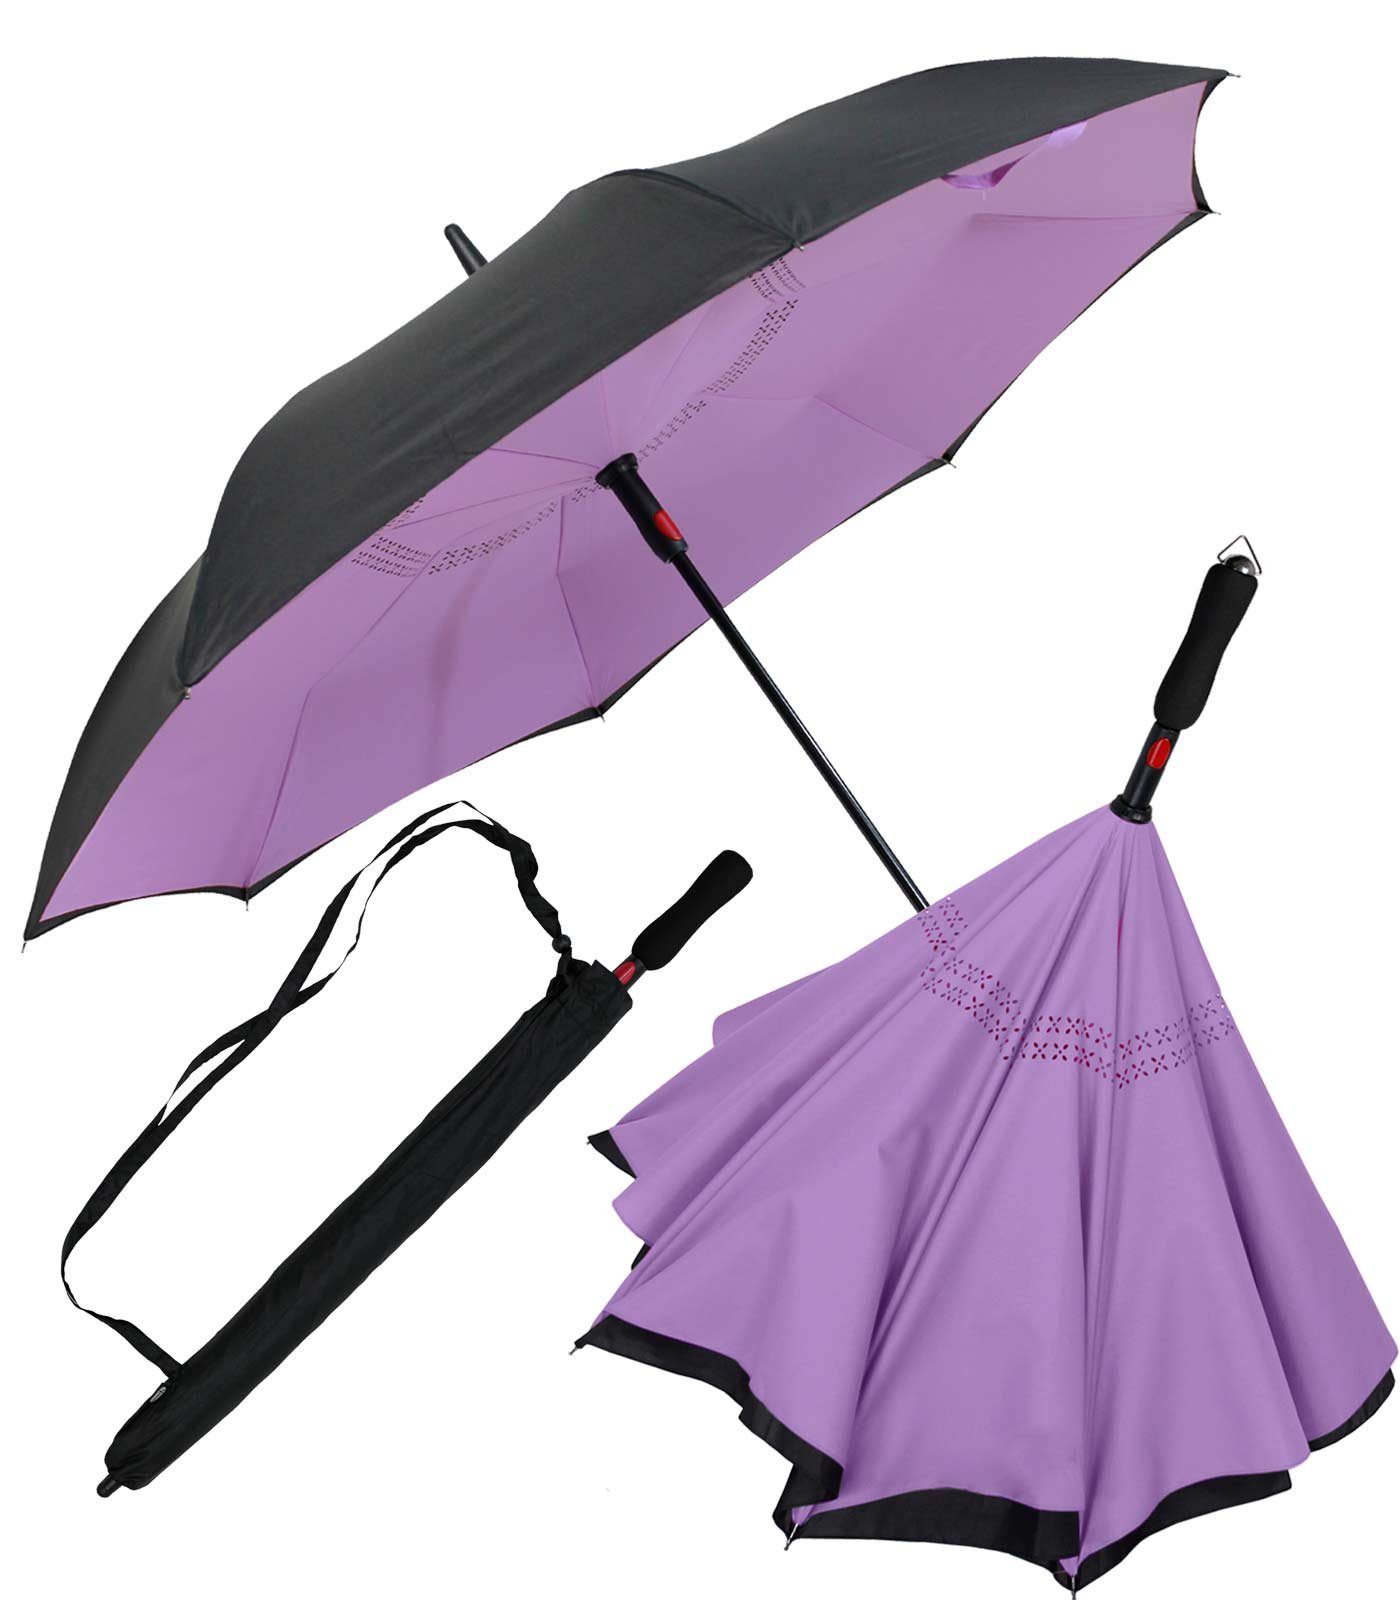 iX-brella Langregenschirm Reverse-Schirm - umgedreht zu öffnen mit Automatik, umgedreht schwarz-helllila